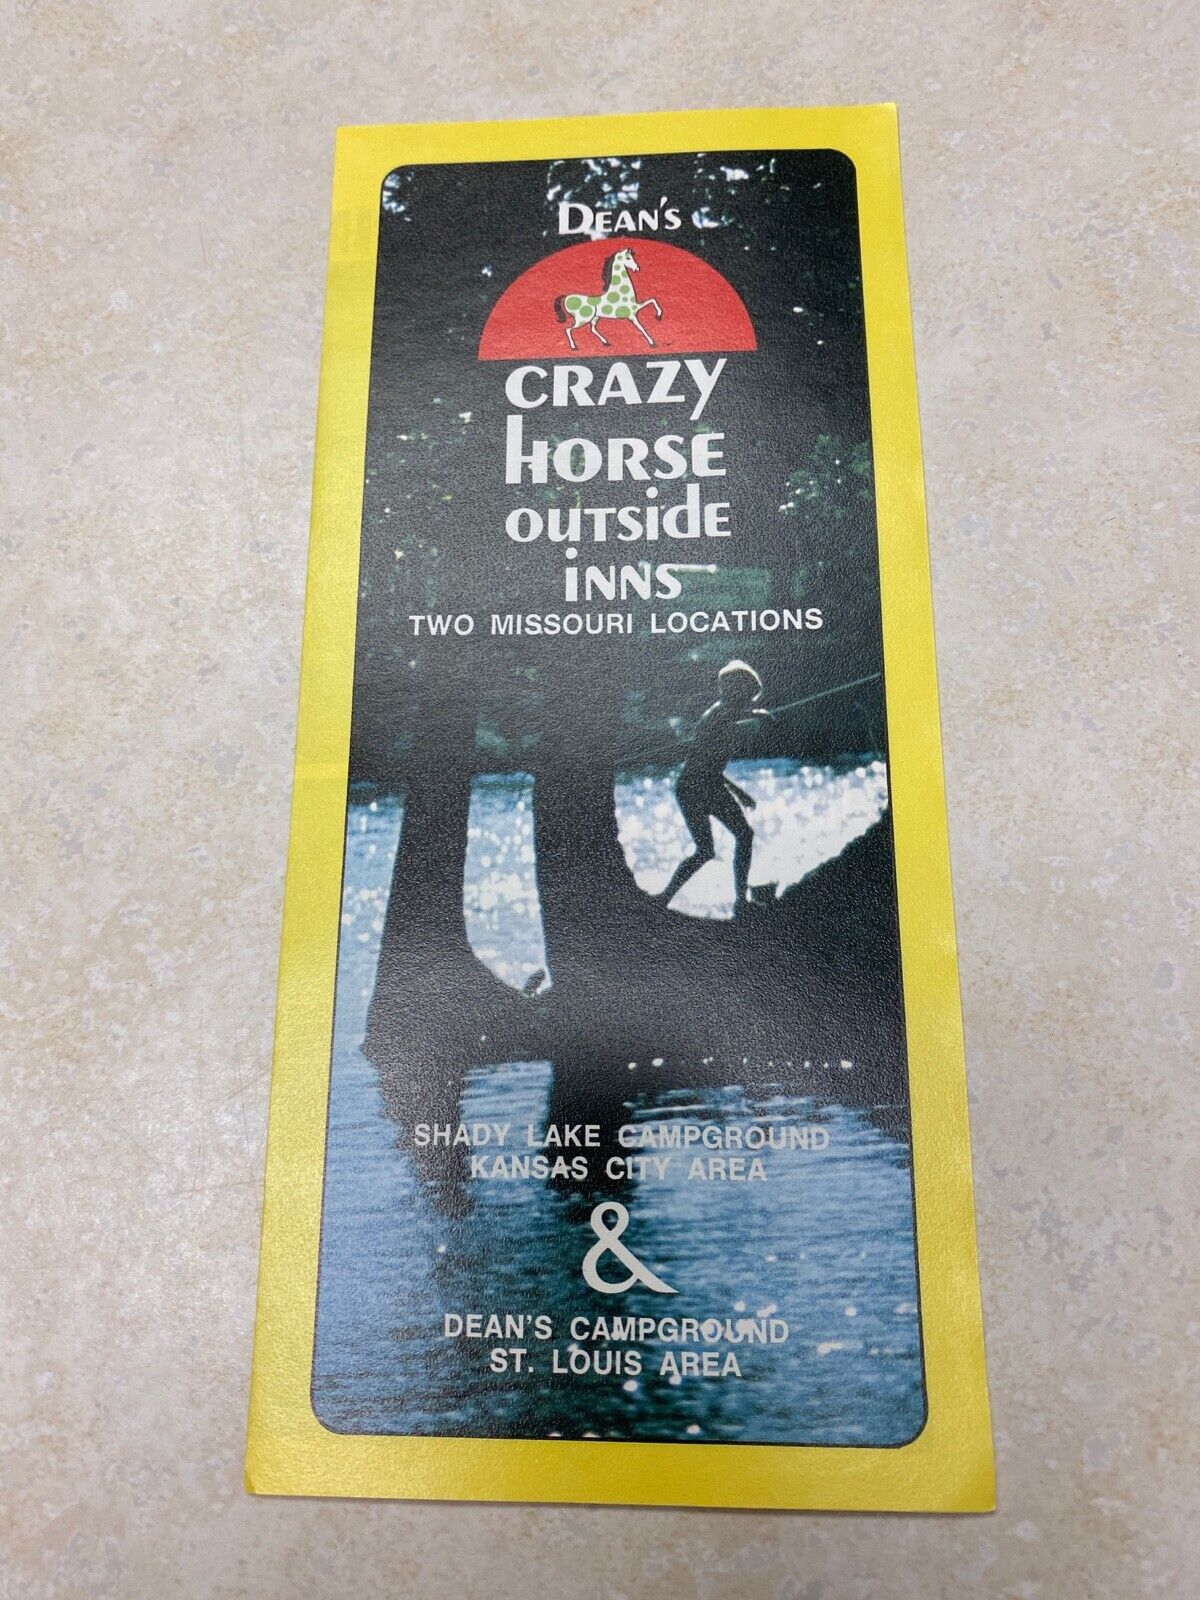 Vintage Dean's Crazy Horse Outside Inns Travel Brochure - Missouri